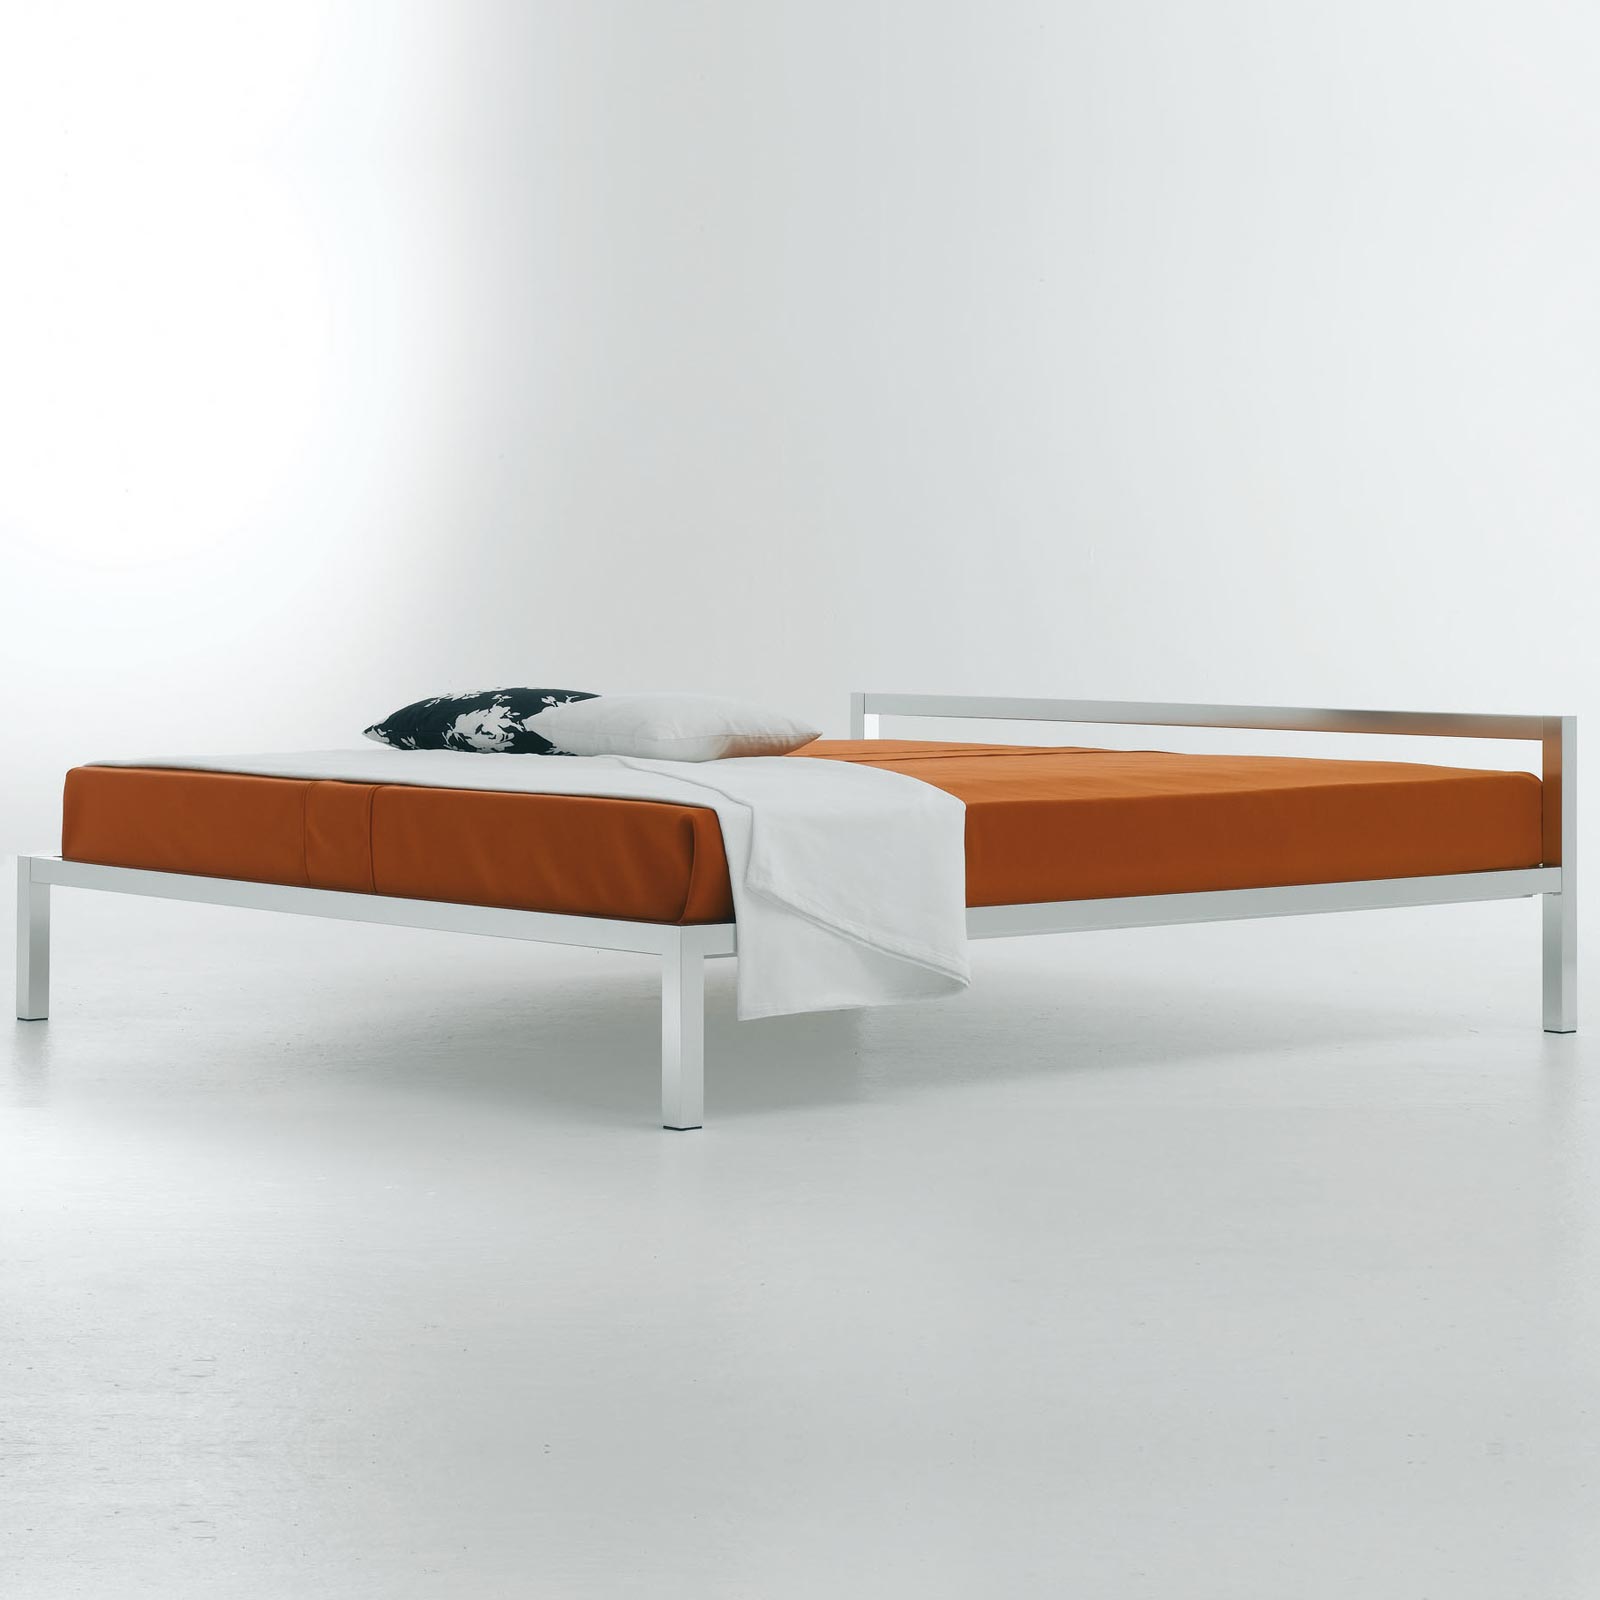 Aluminium Bed Anodized By Mdf Italia, Aluminum Bed Frame